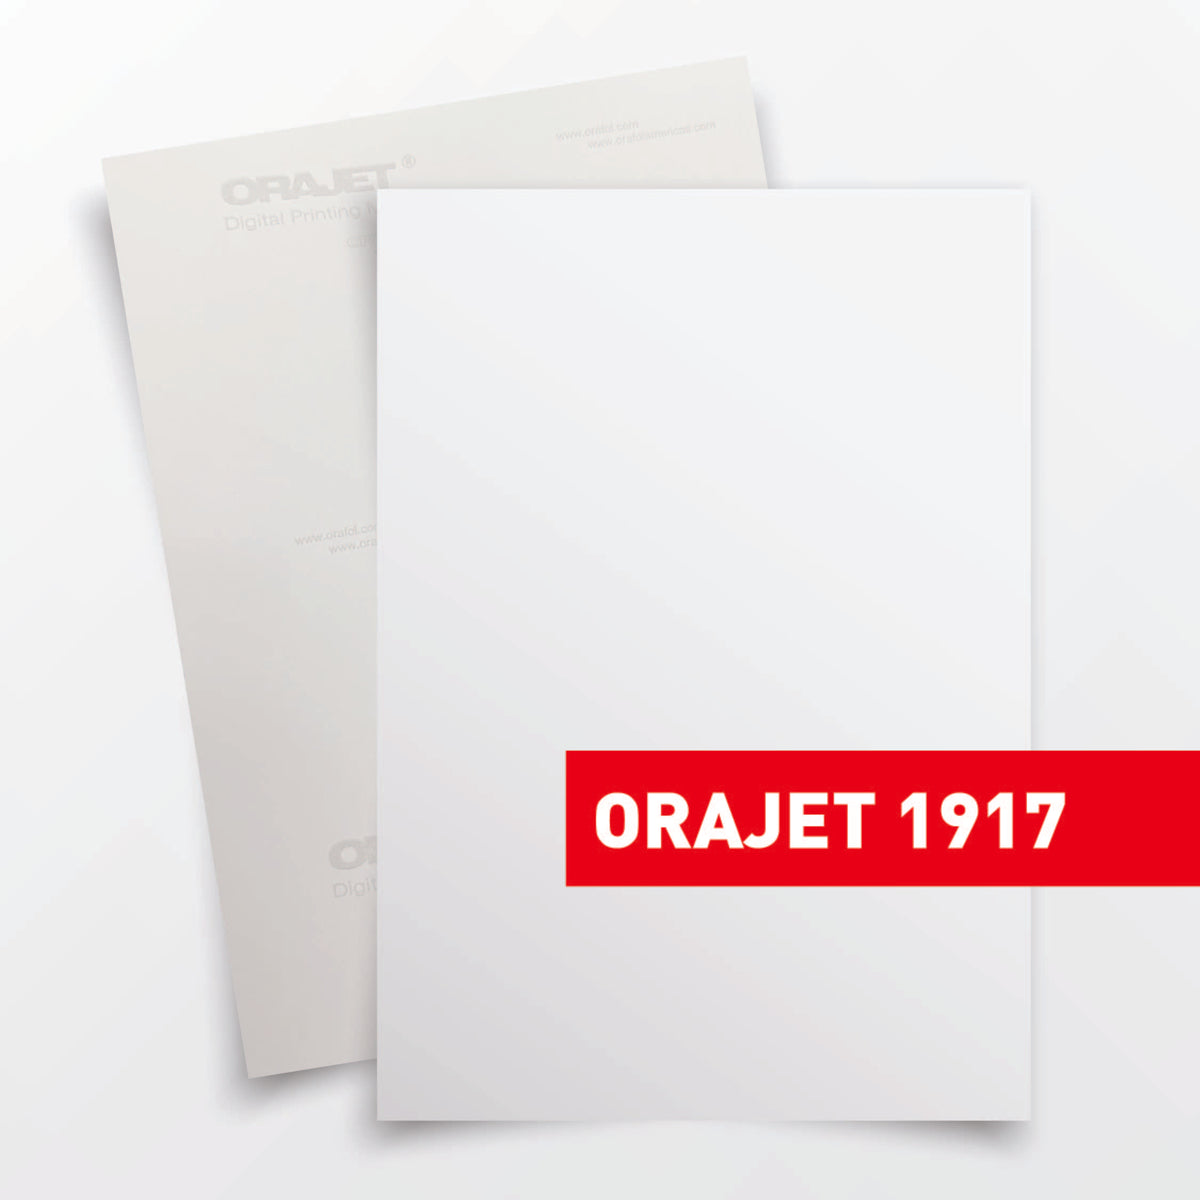 Oracal Inkjet Printable Permanent Adhesive Vinyl - 1917 - Creative